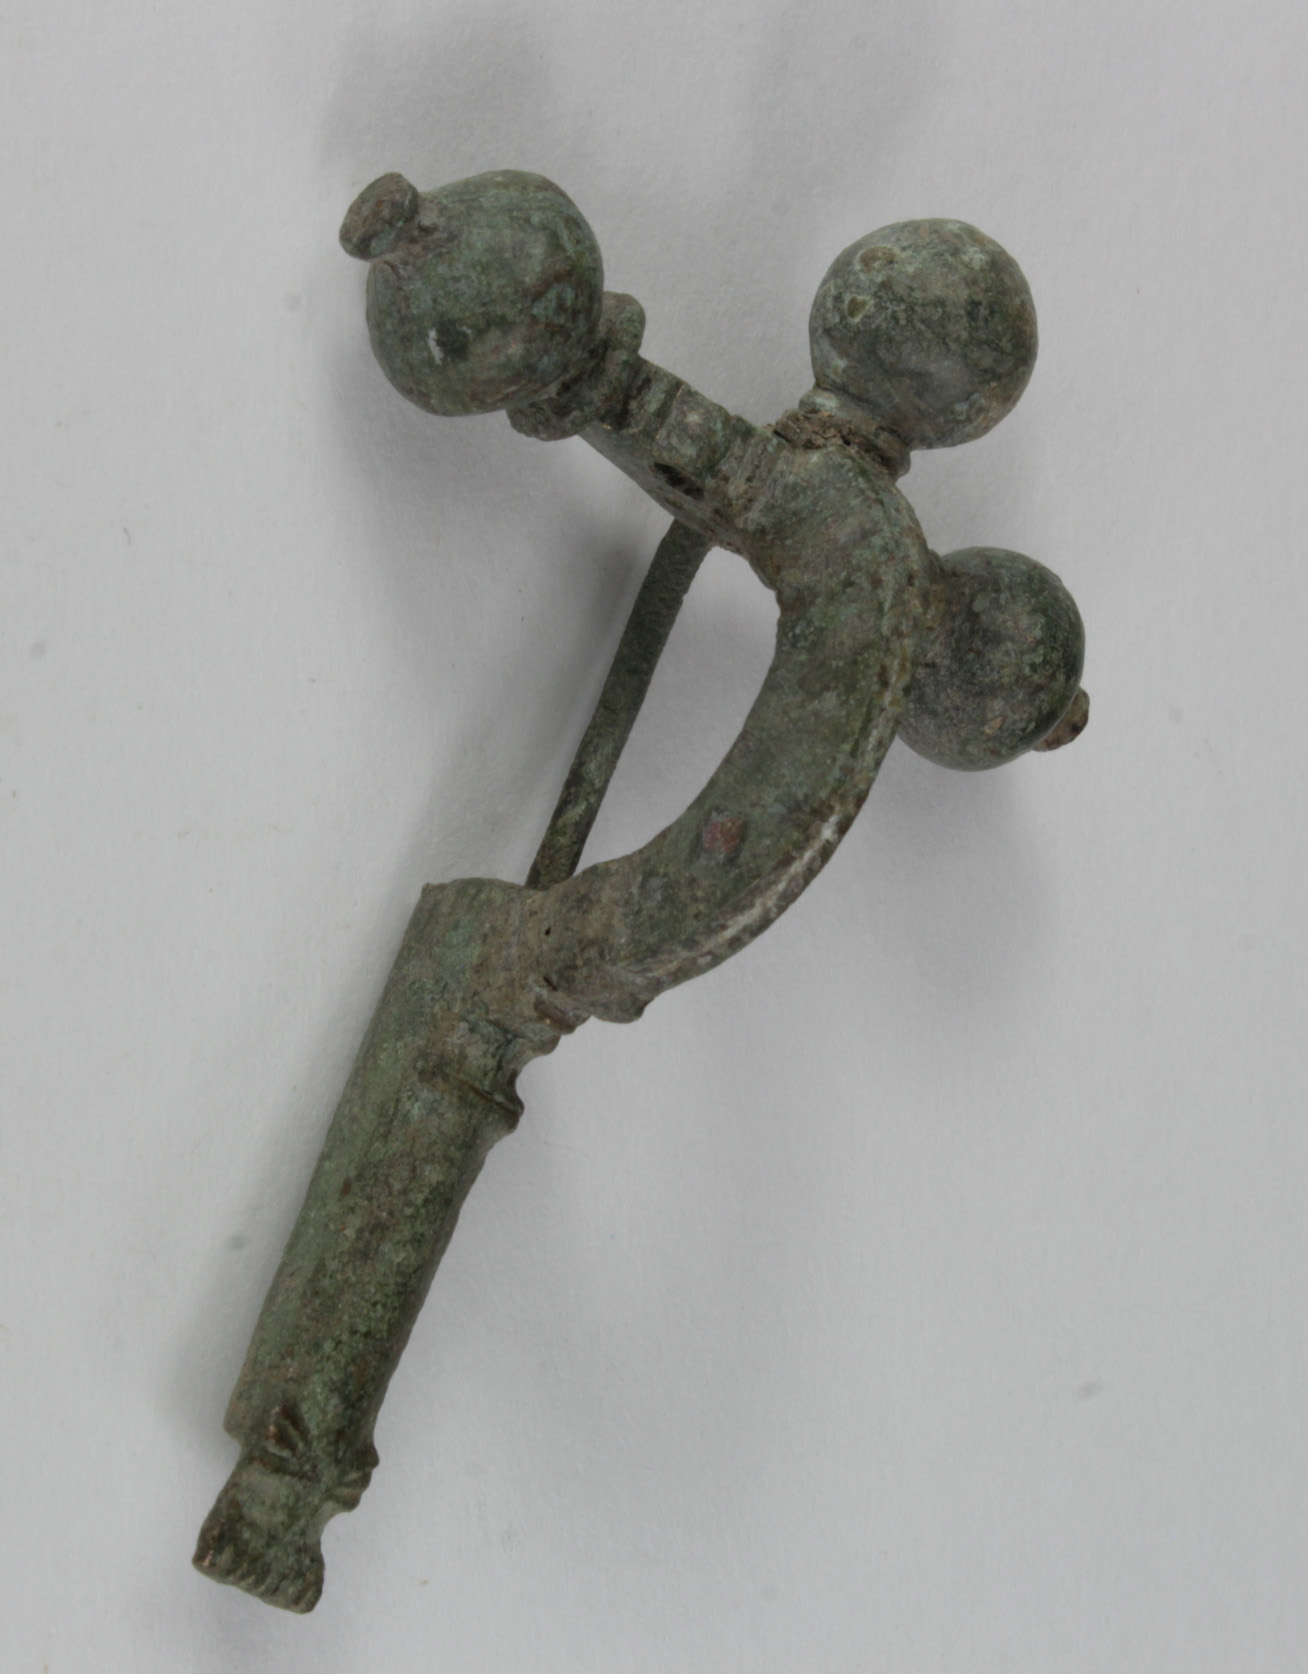 Roman Legionary Crossbow Fibula , C. 400 A.D. Complete original condition with pin intact. Nice